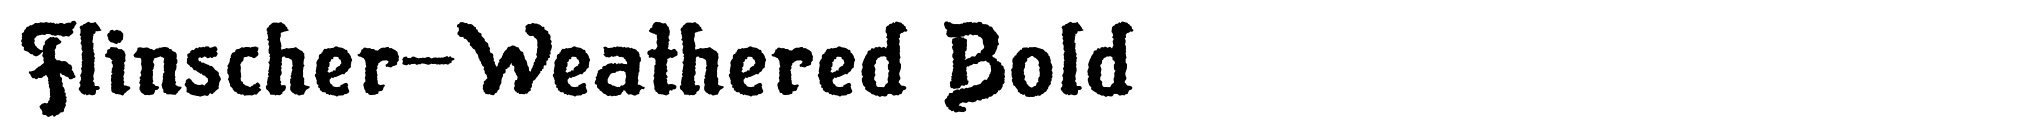 Flinscher-Weathered Bold image